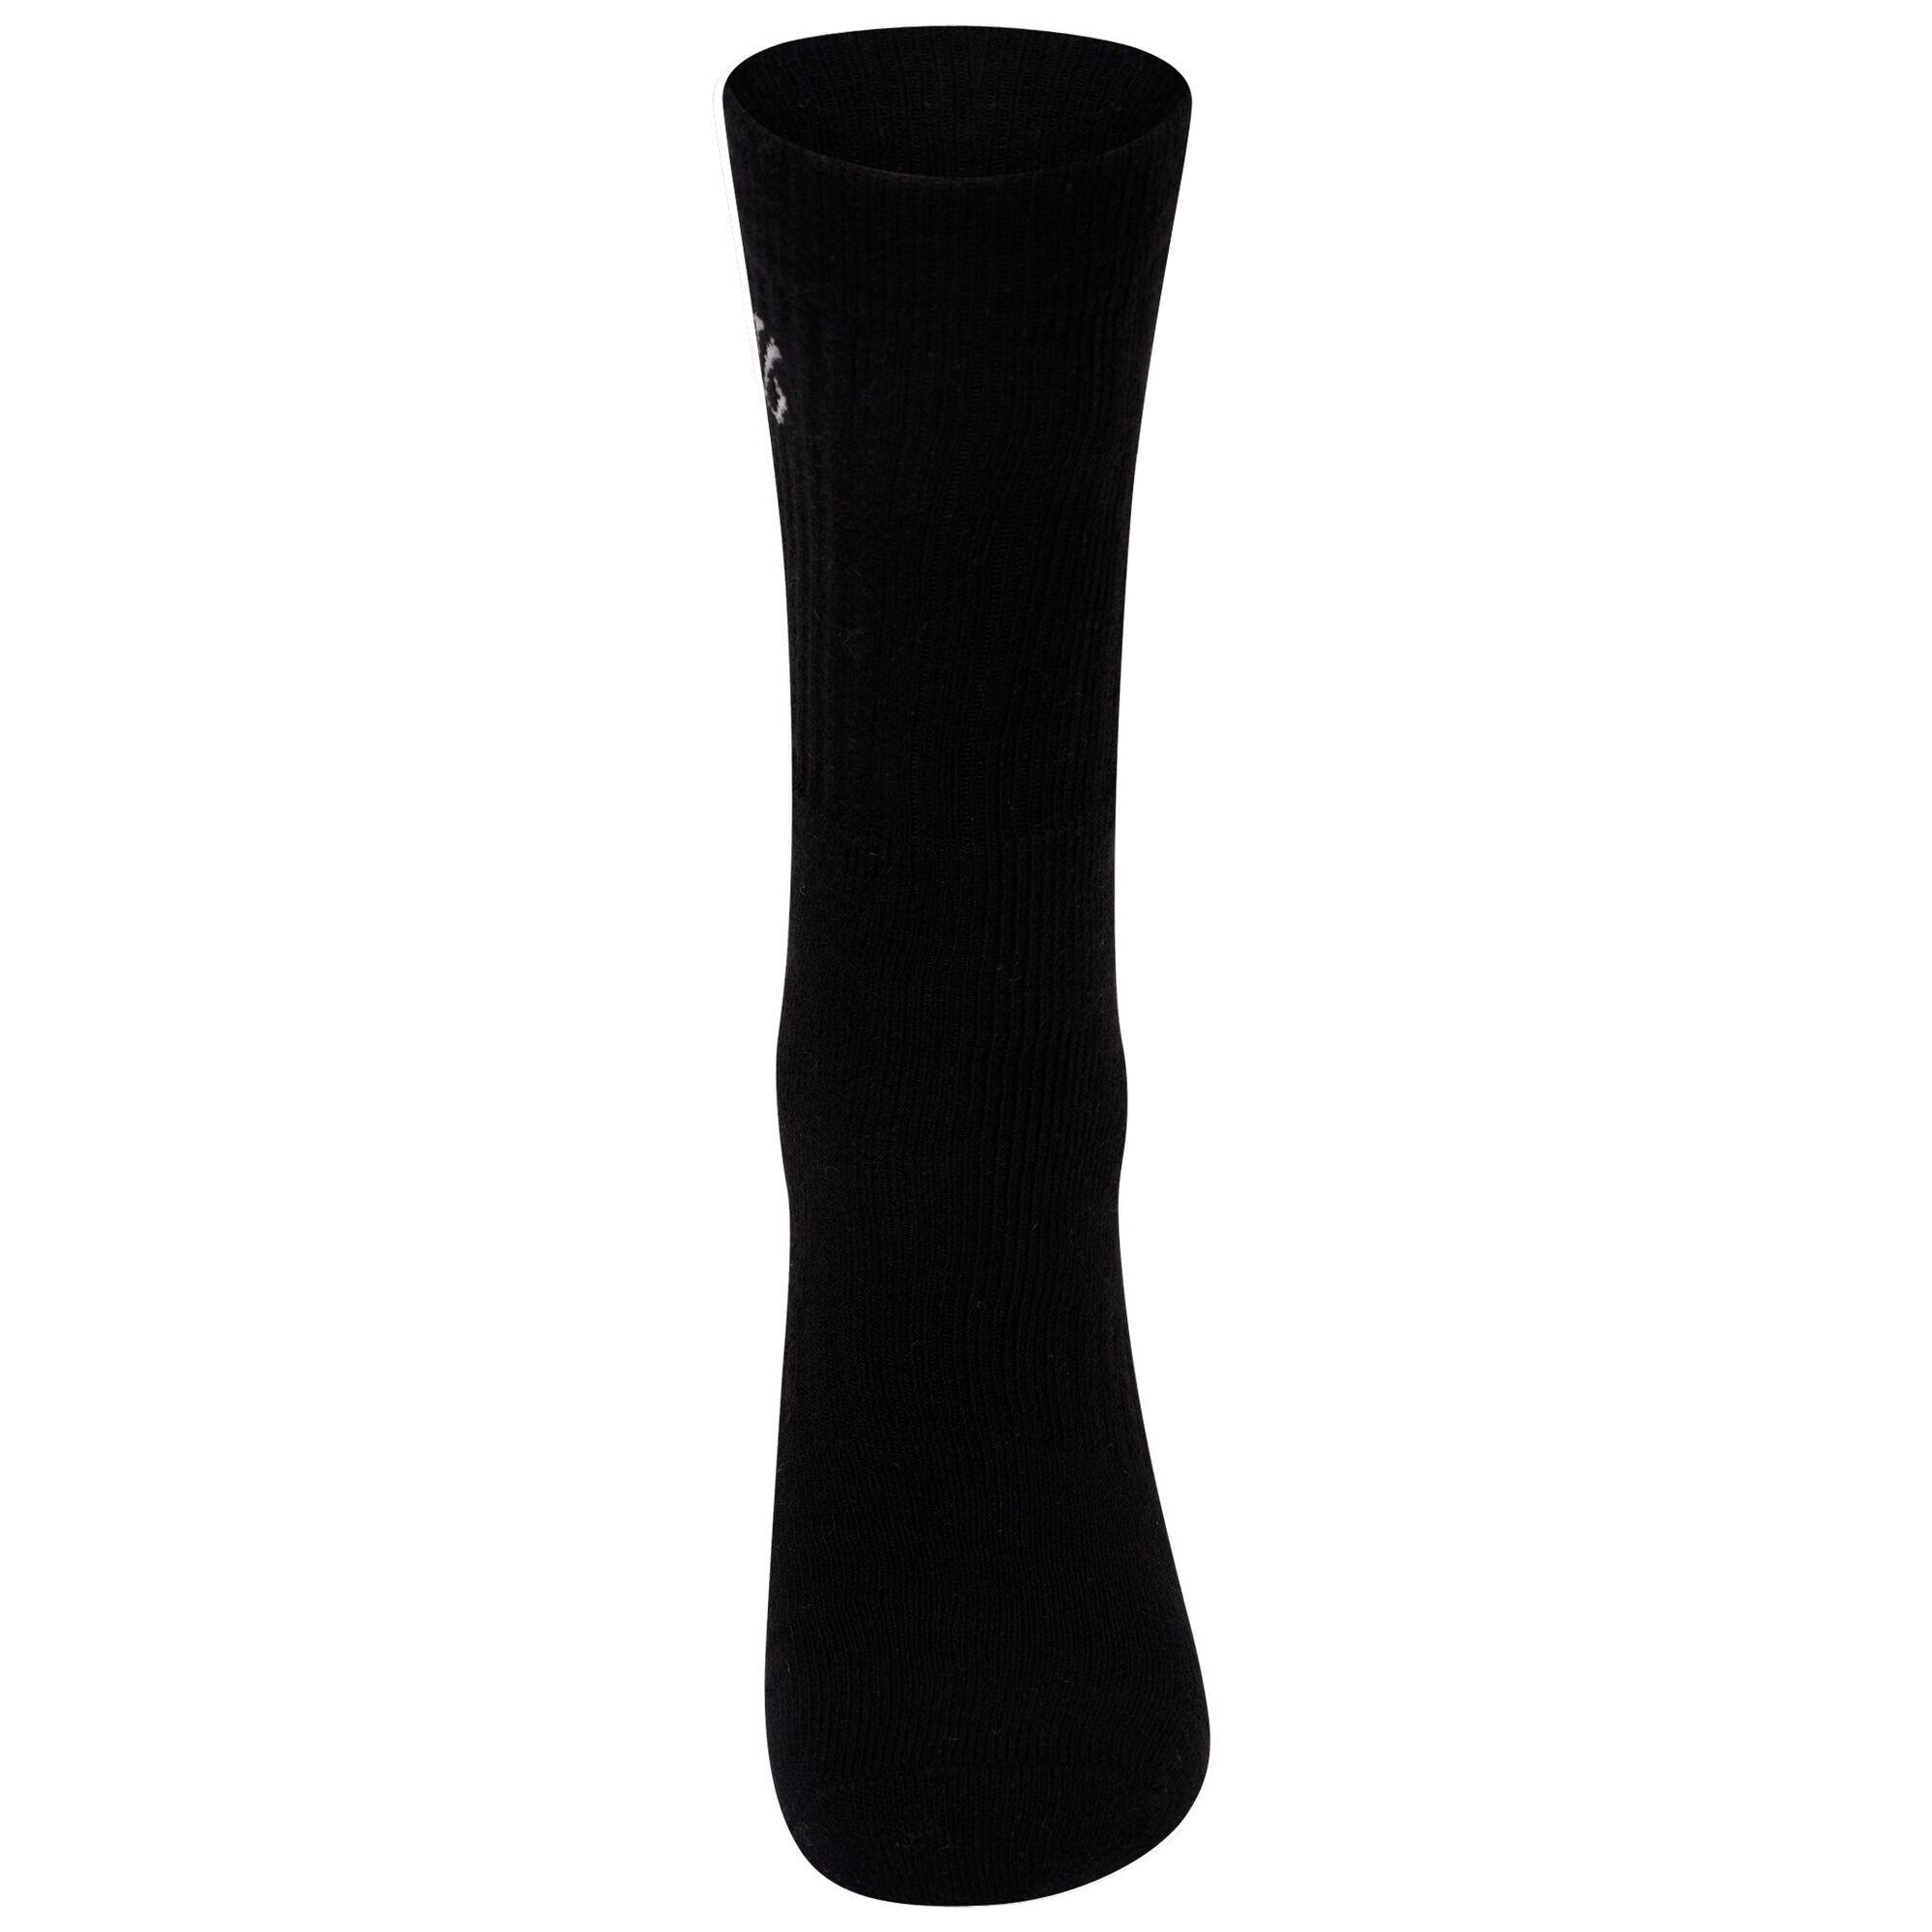 Unisex Adult Essentials Sports Ankle Socks (Pack of 3) (Black) 4/5